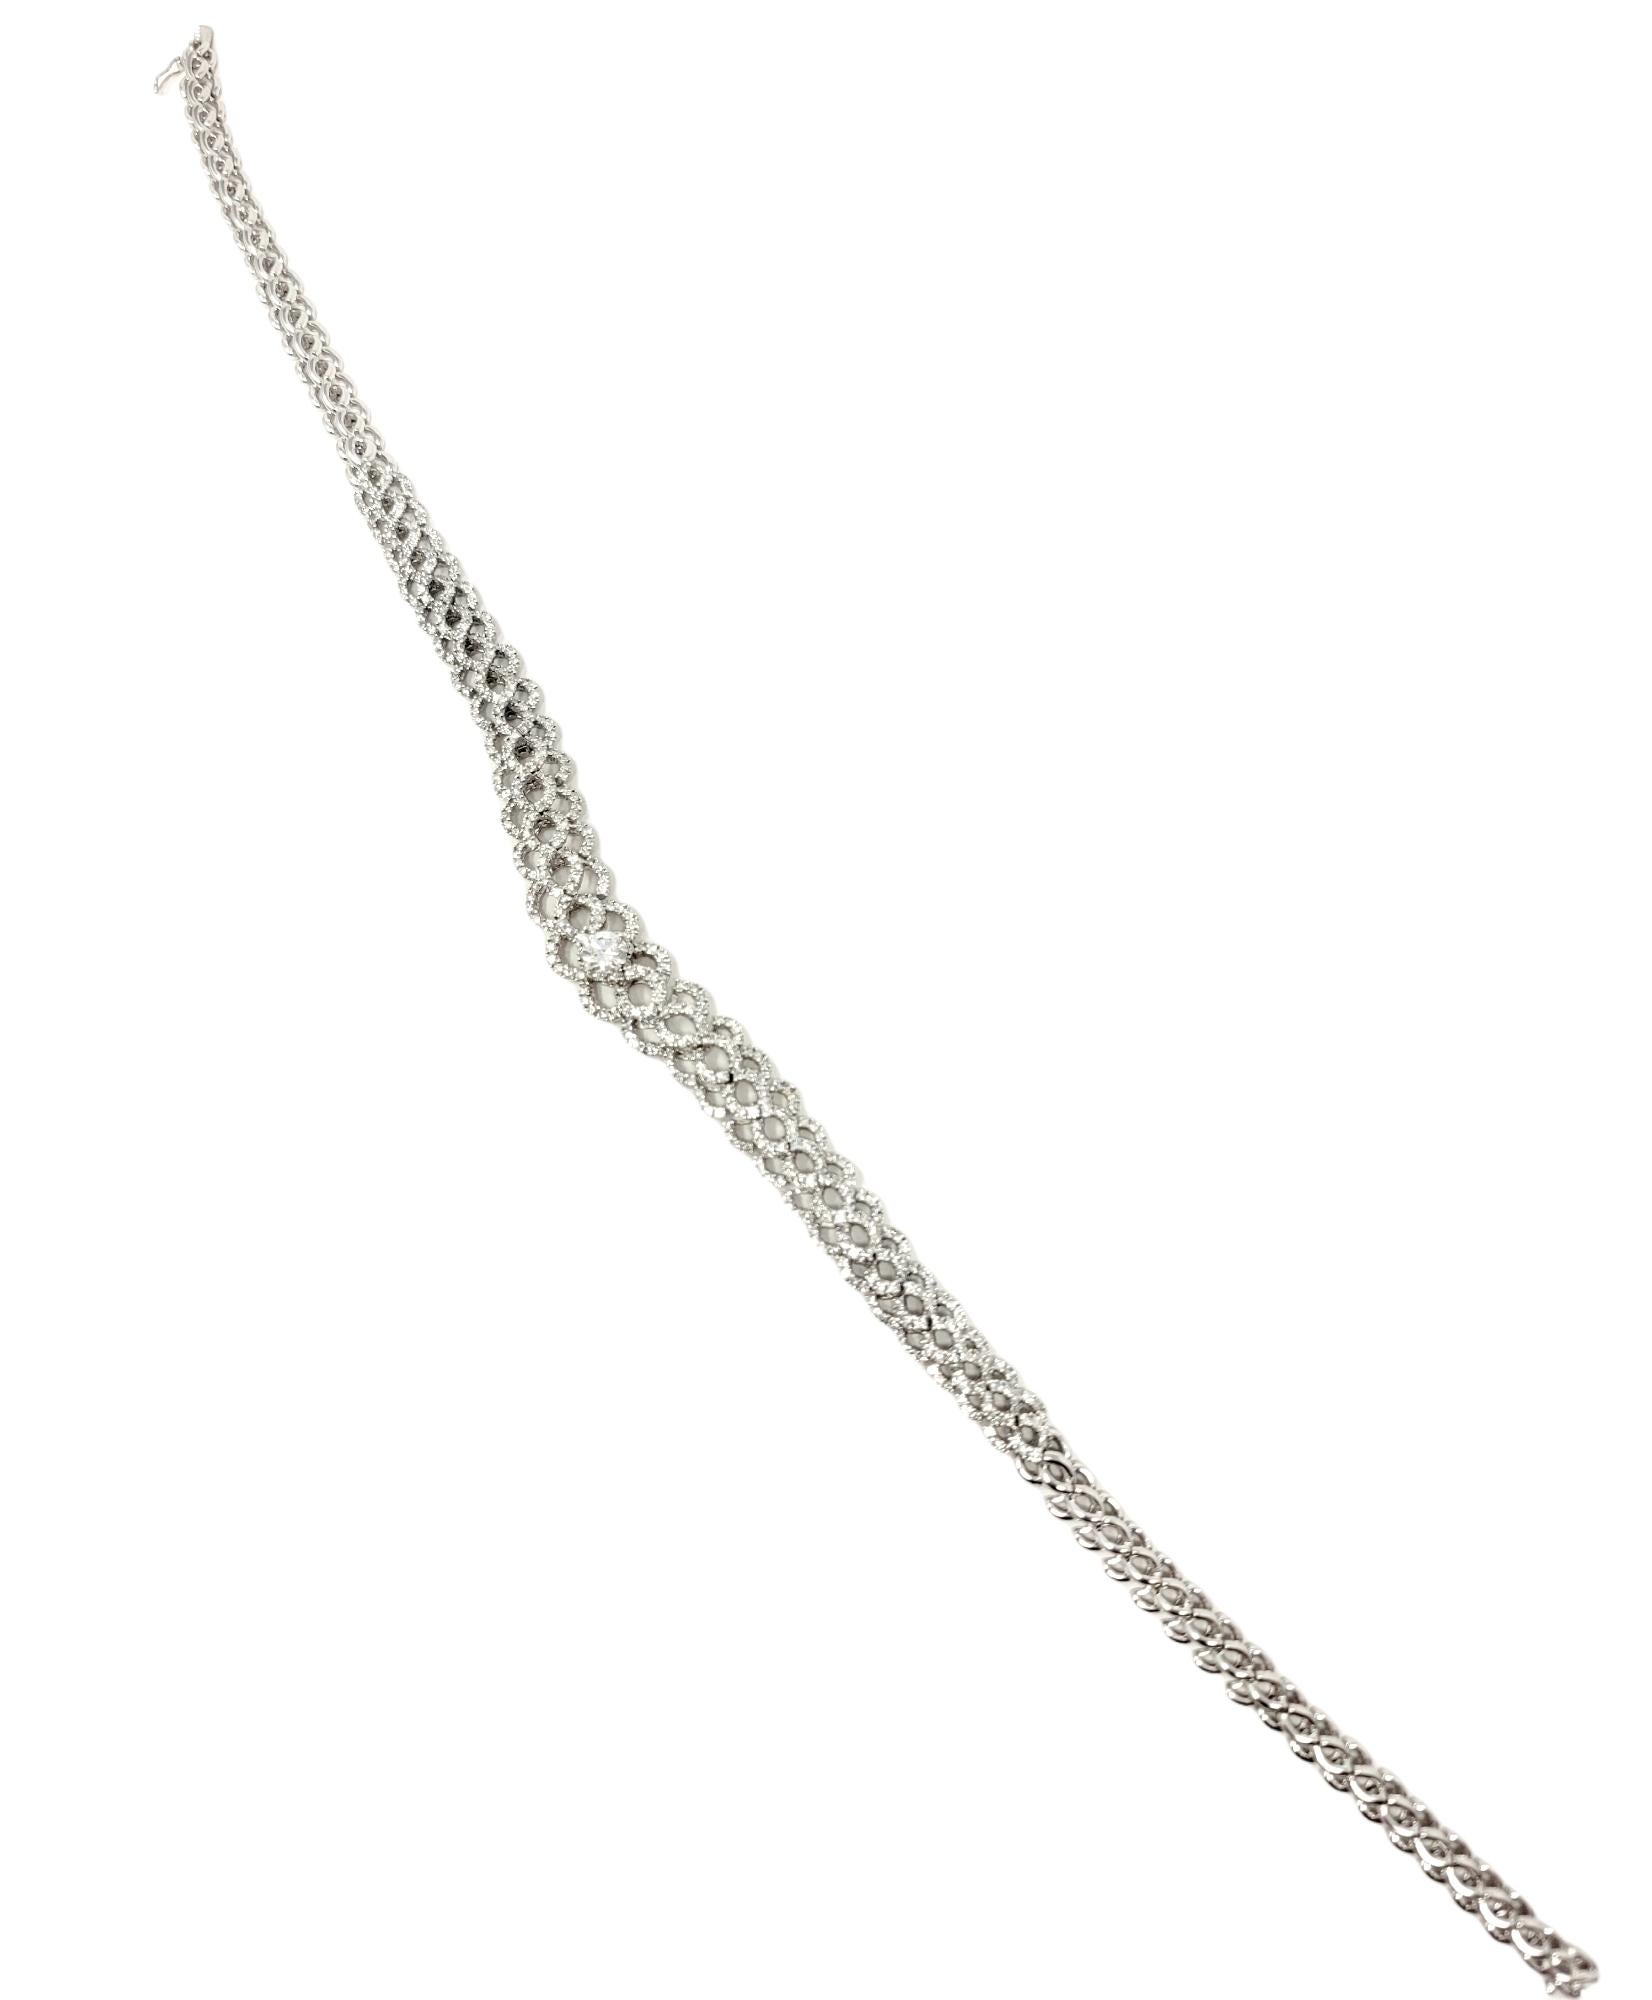 12.34 Carat Total Round Diamond Woven Braid Collar Necklace 14 Karat White Gold For Sale 2